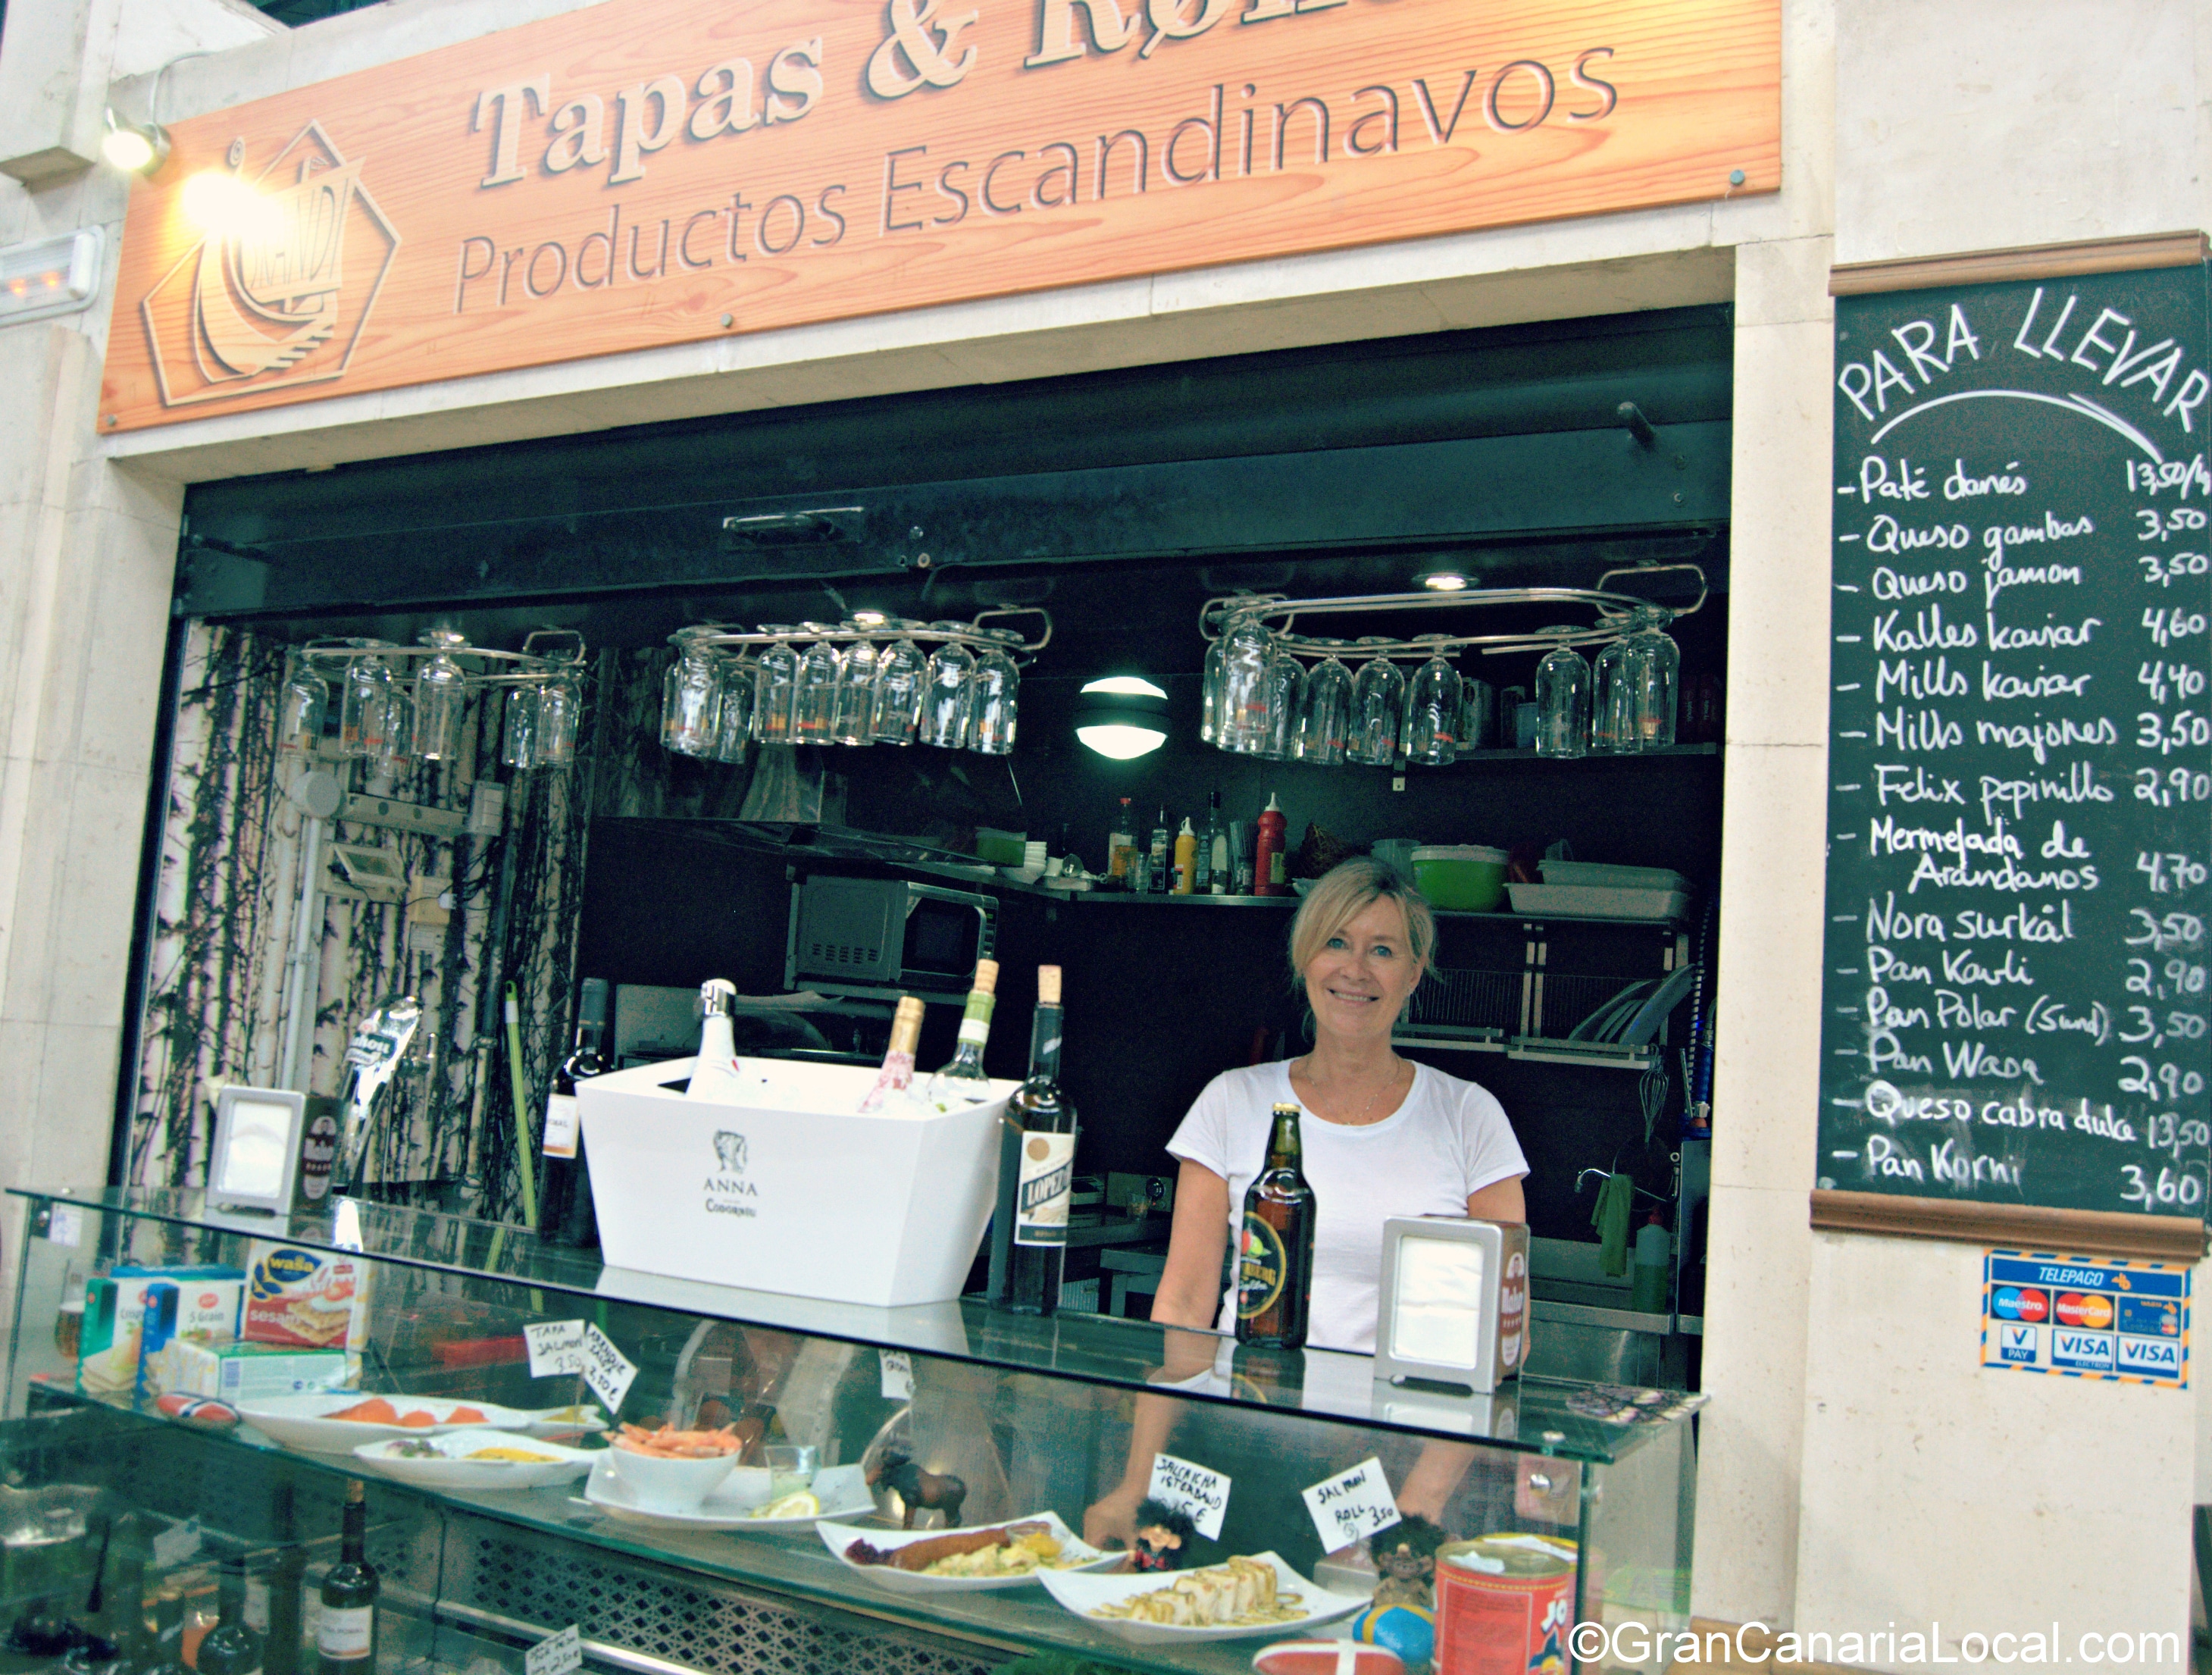 The Mercado del Puerto is a gateway to Scandinavian cuisine